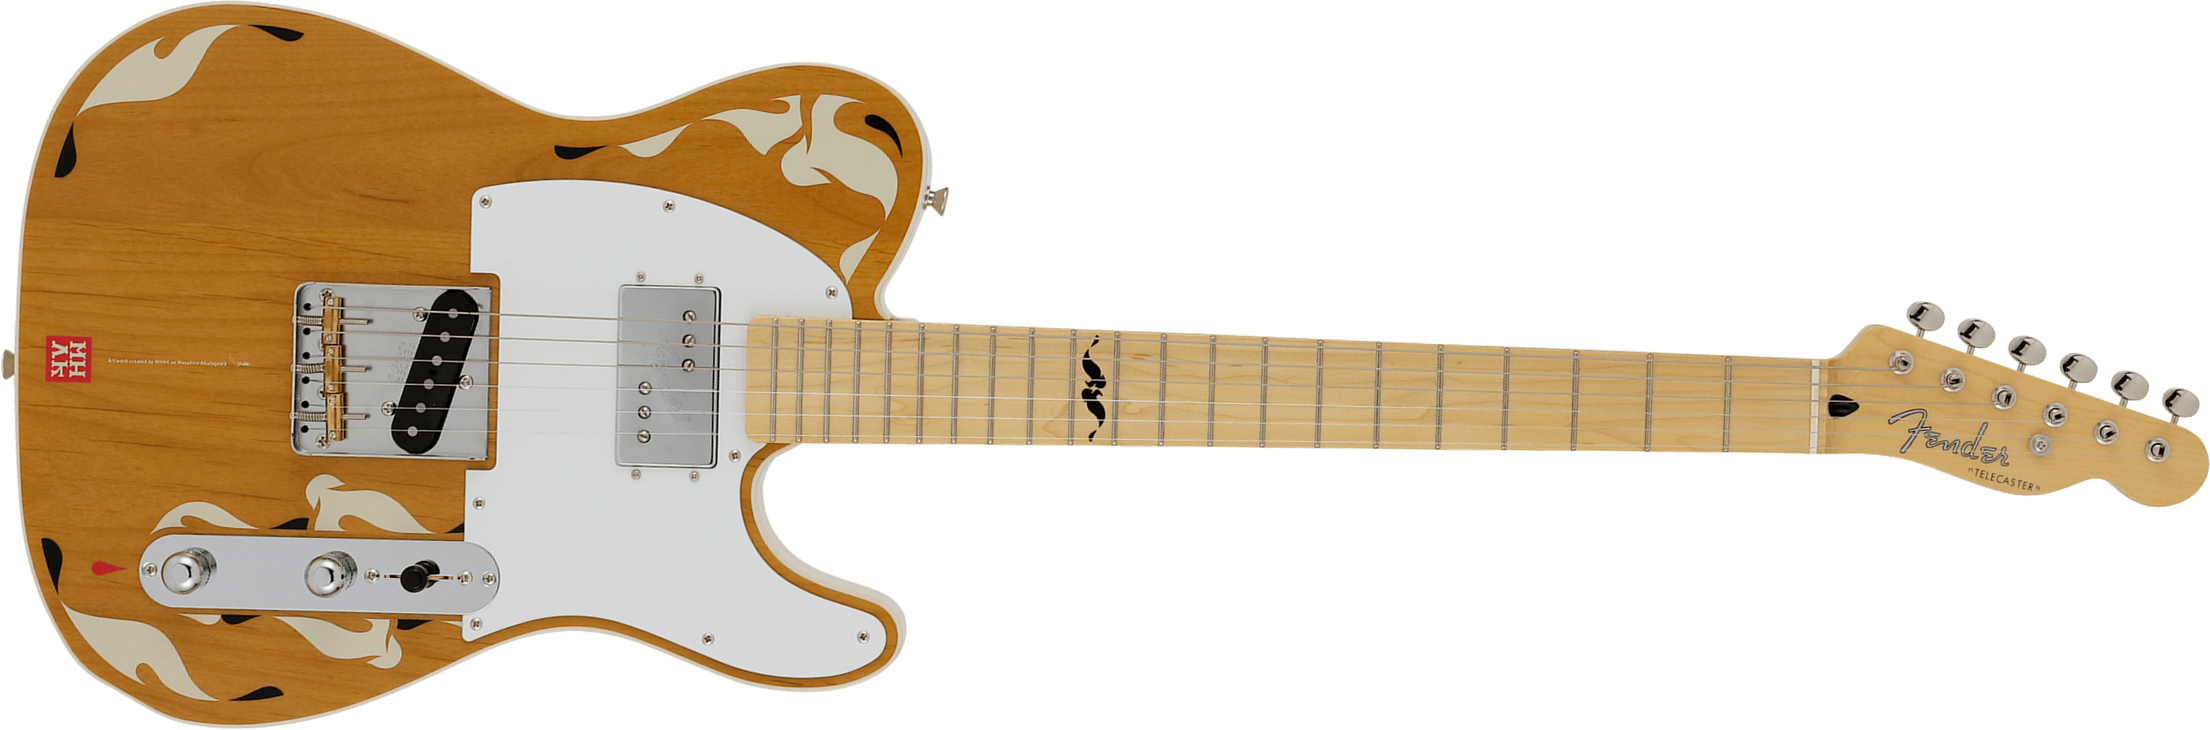 Fender Tele Mhak  Art Gallery Jap Hs Mn - Natural - Tel shape electric guitar - Main picture